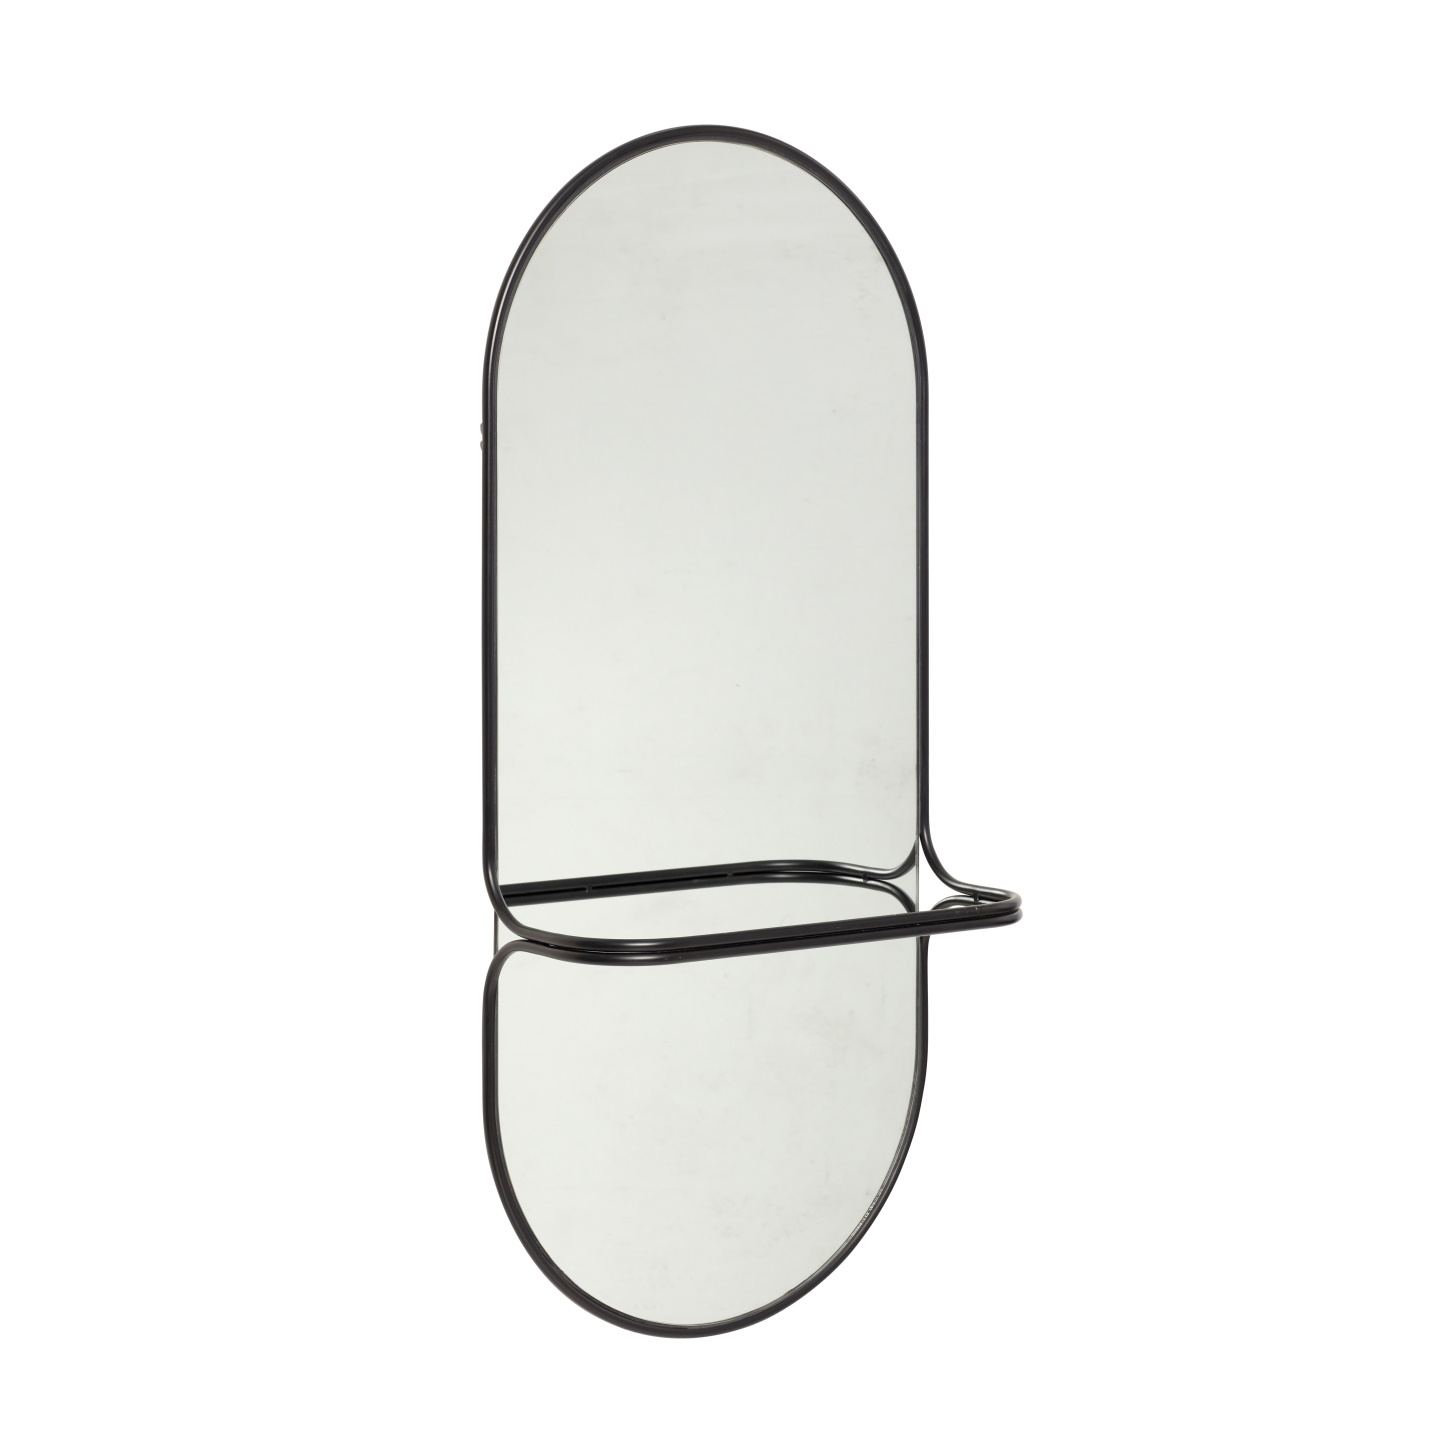 Oval spegel svart klädstång Hubsch